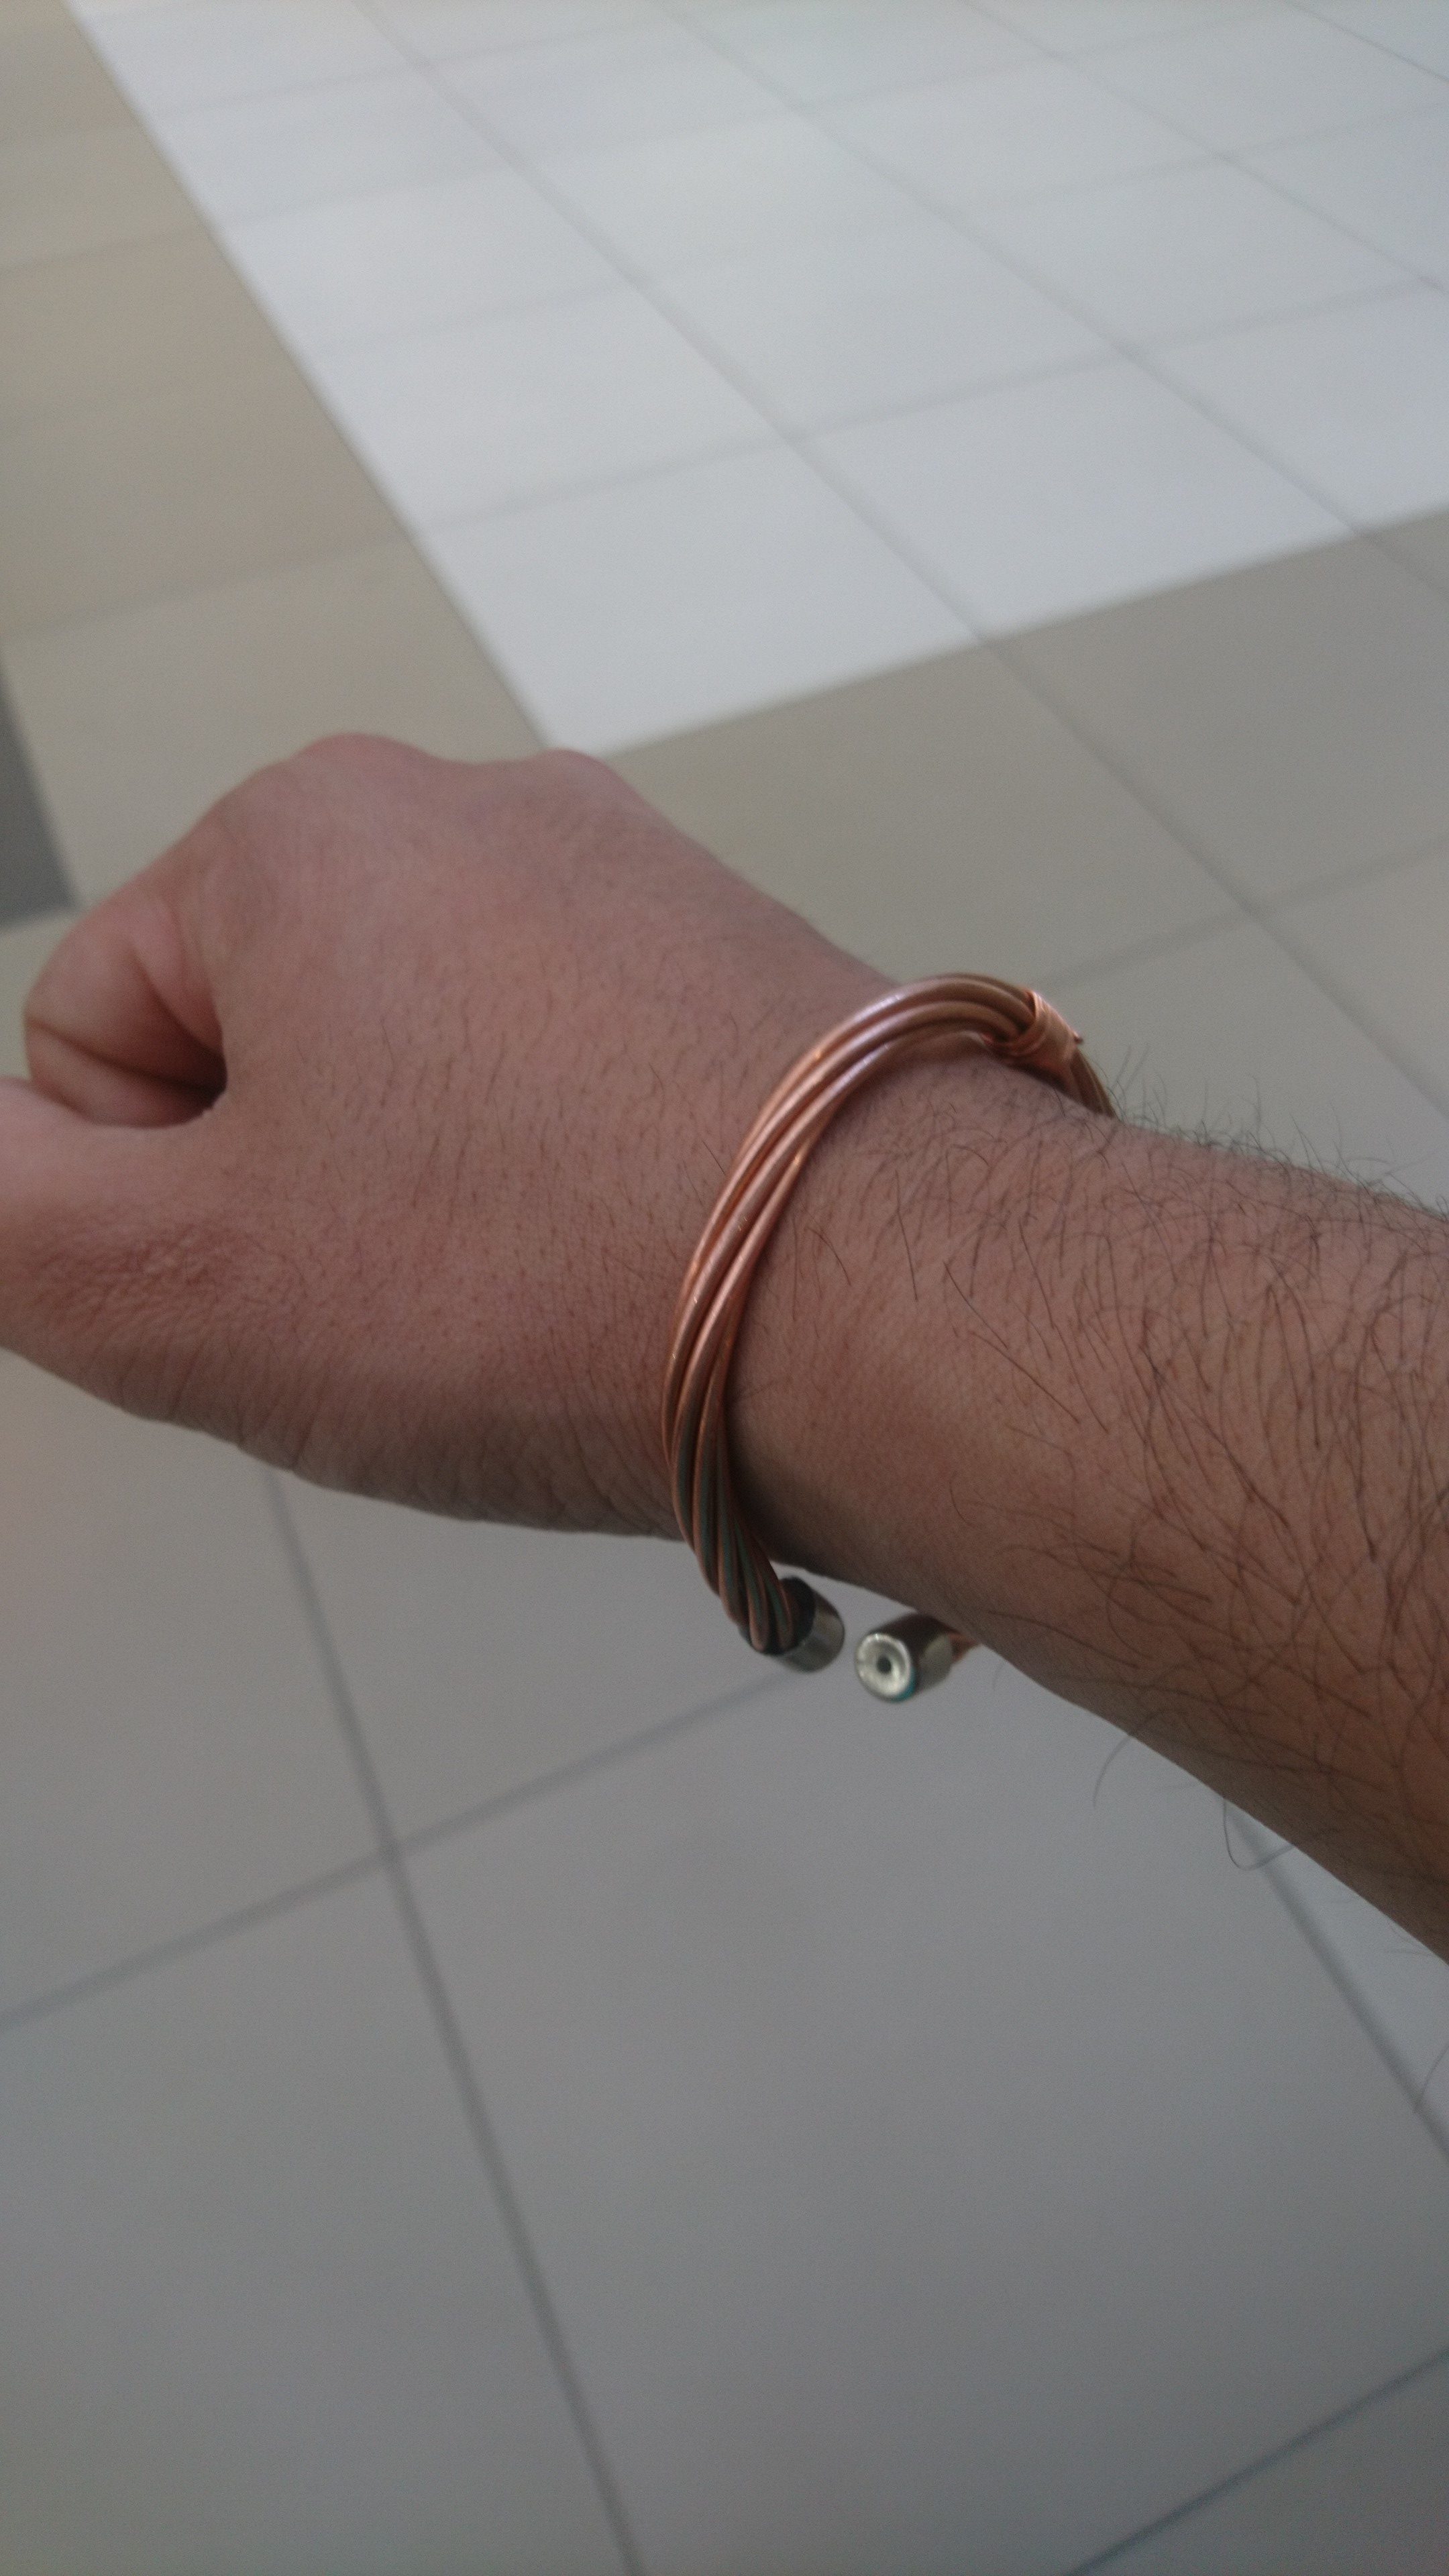 Magnetic Copper Bracelet Healing Bio Therapy Arthritis-Pain Relief Bangle  Cuff | eBay